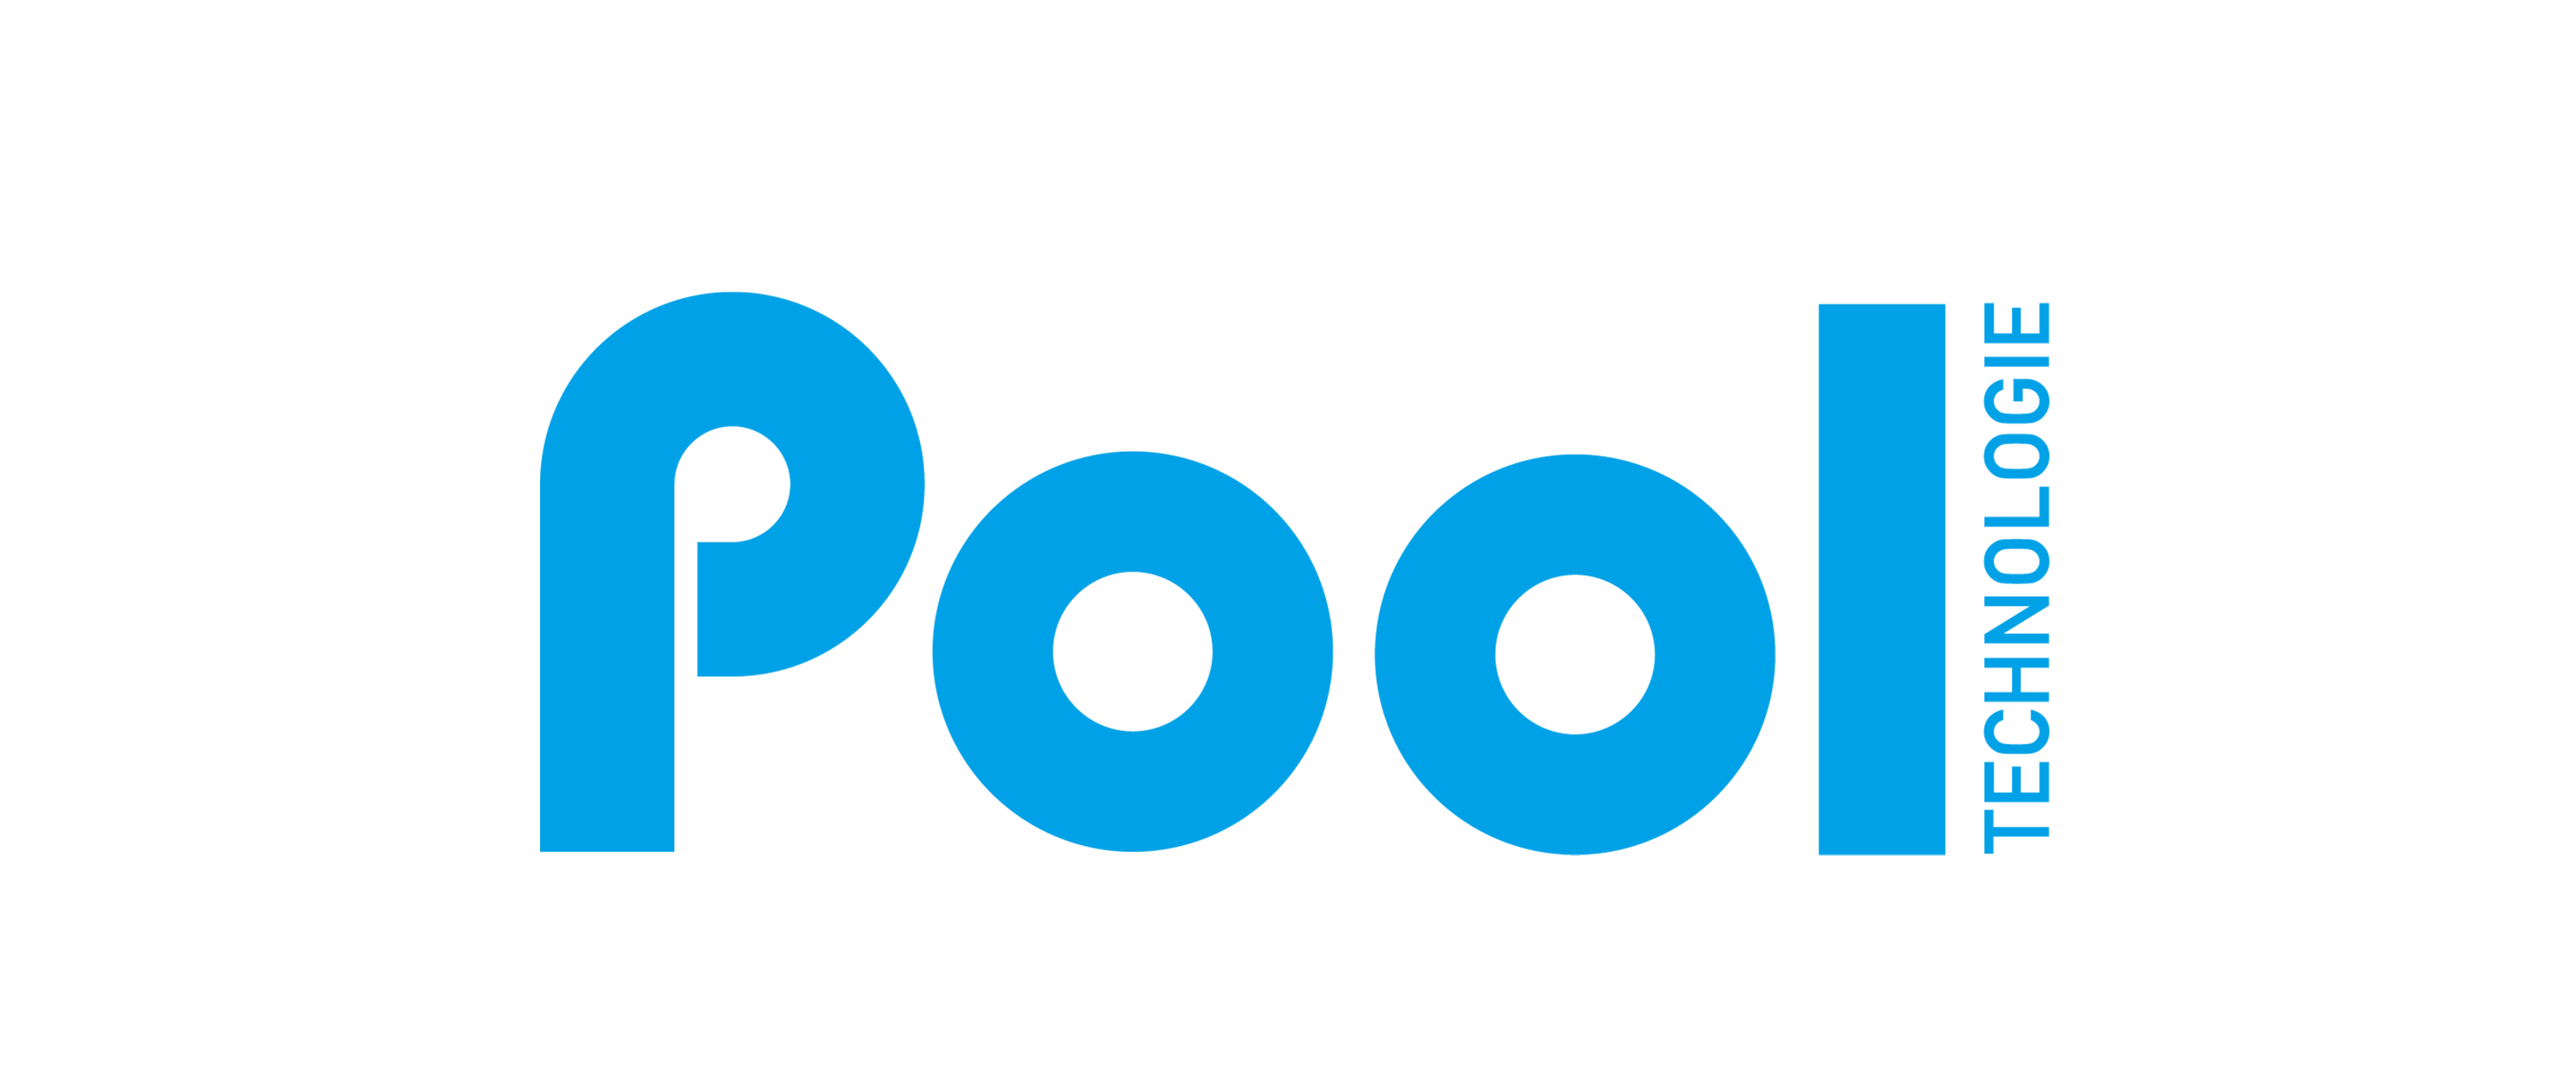 Logo Pool Technologie